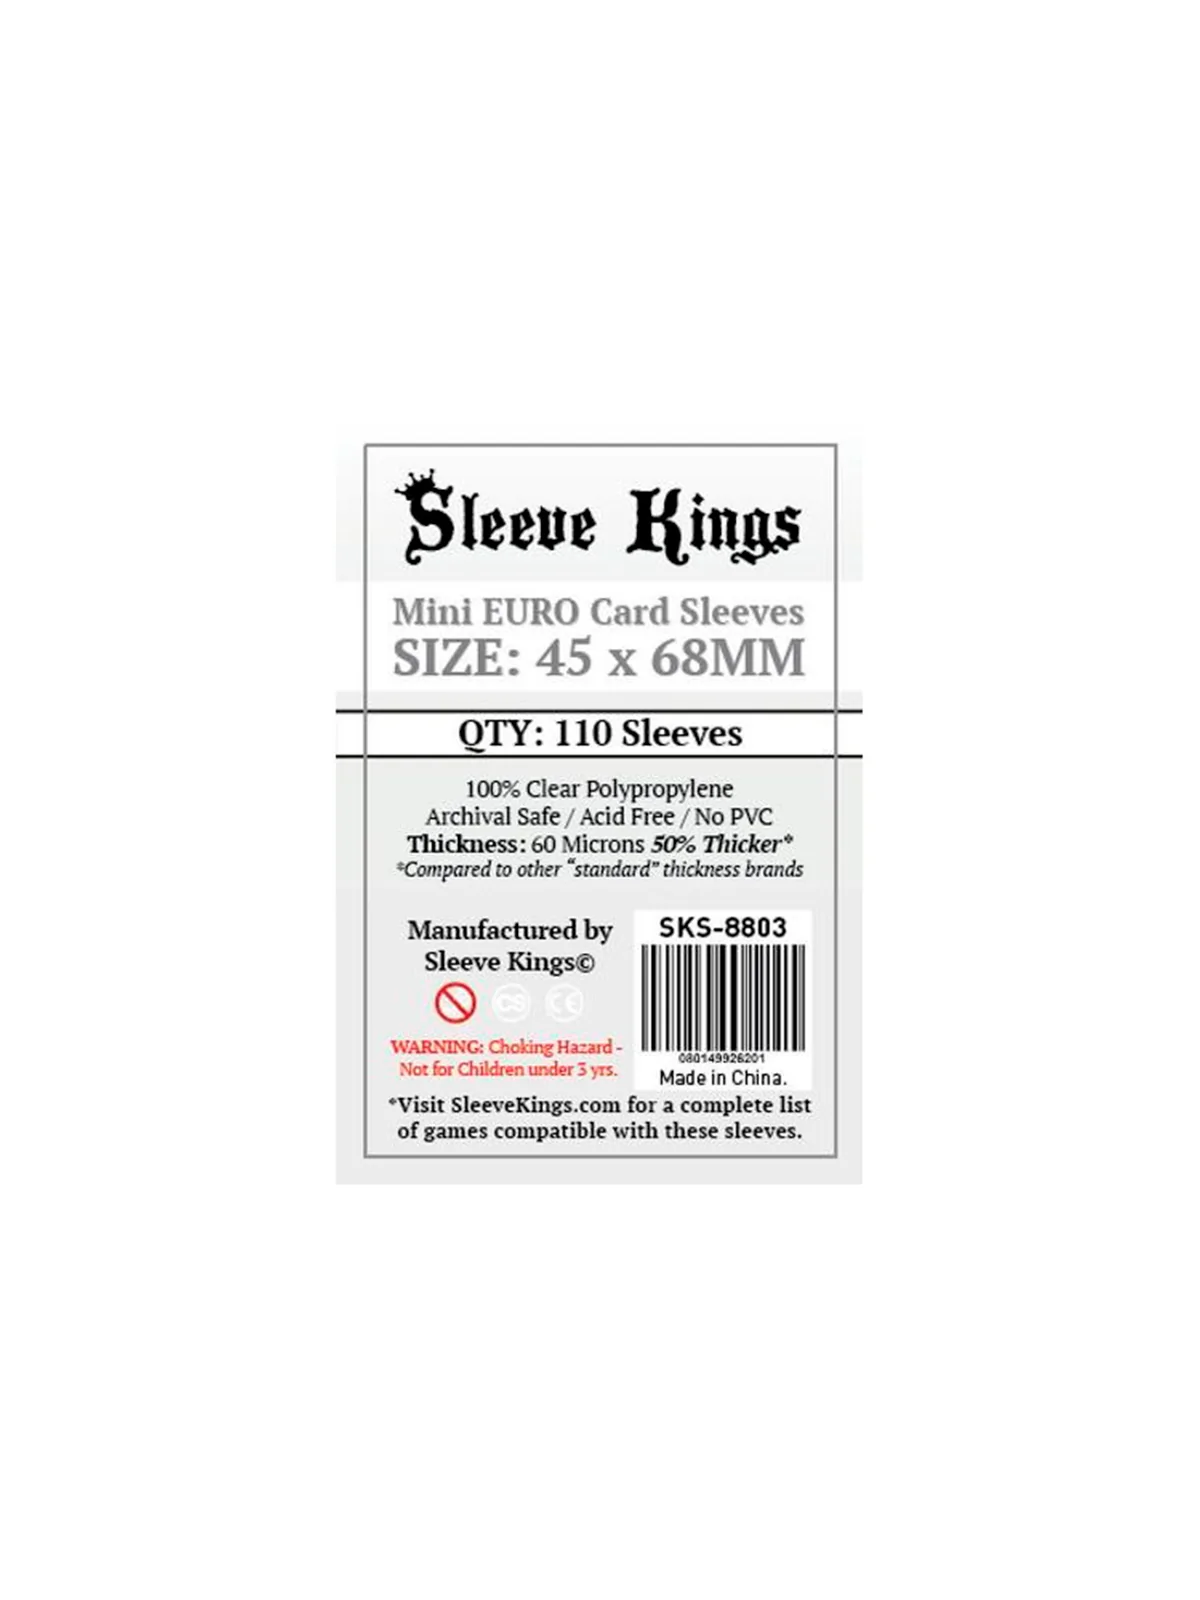 Comprar [8803] Sleeve Kings Mini Euro Card Sleeves (45x68mm) barato al